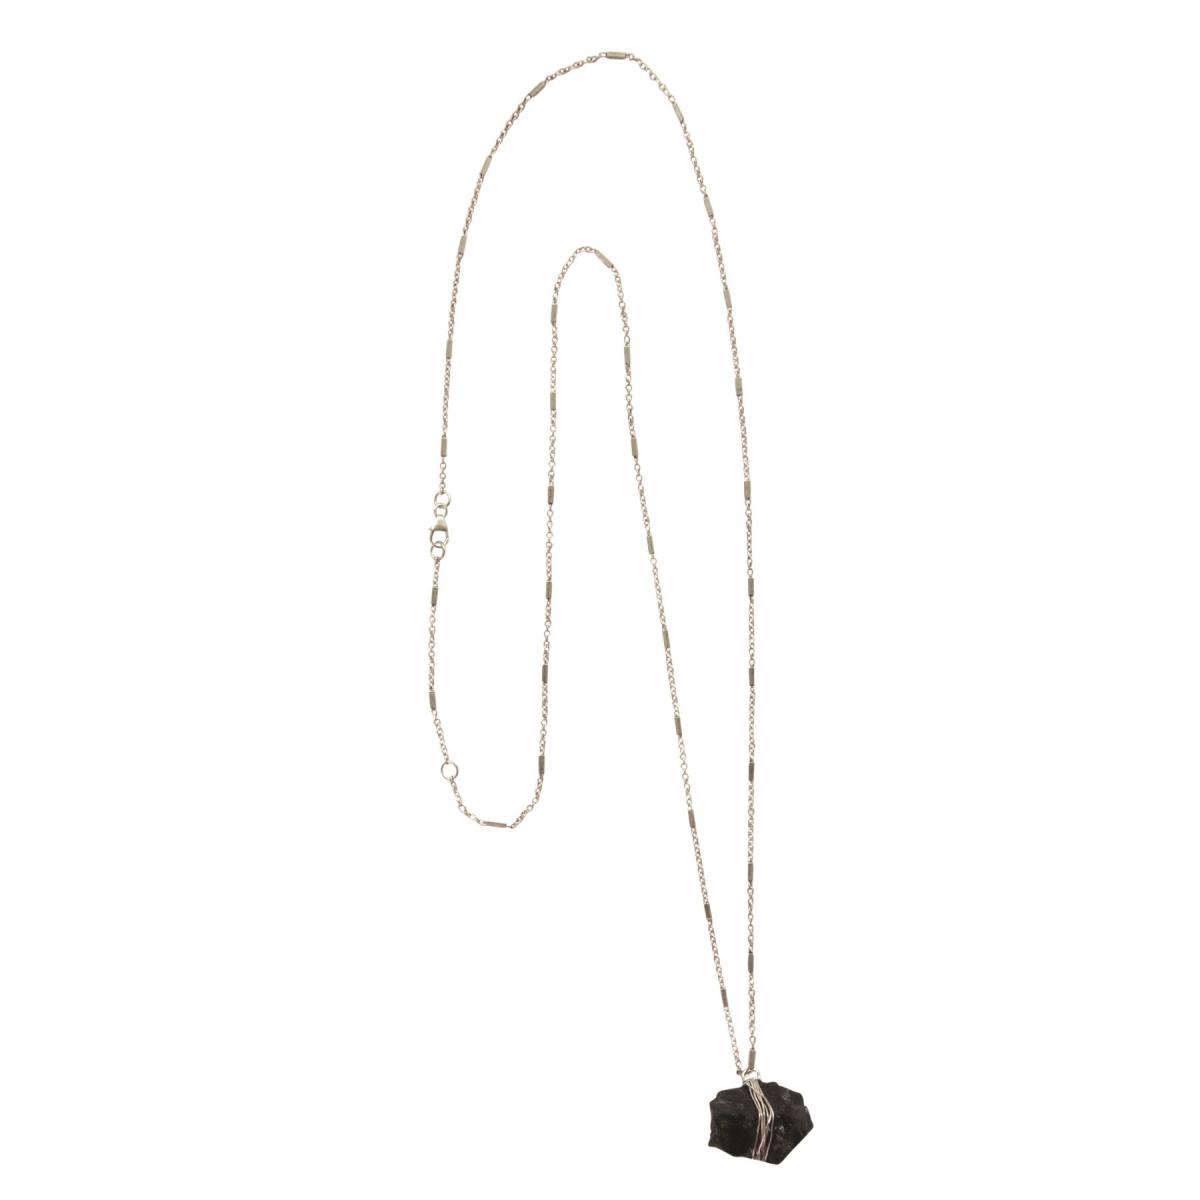 SoJustShop.com, Passion Black Onyx Silver Necklace, £51.99